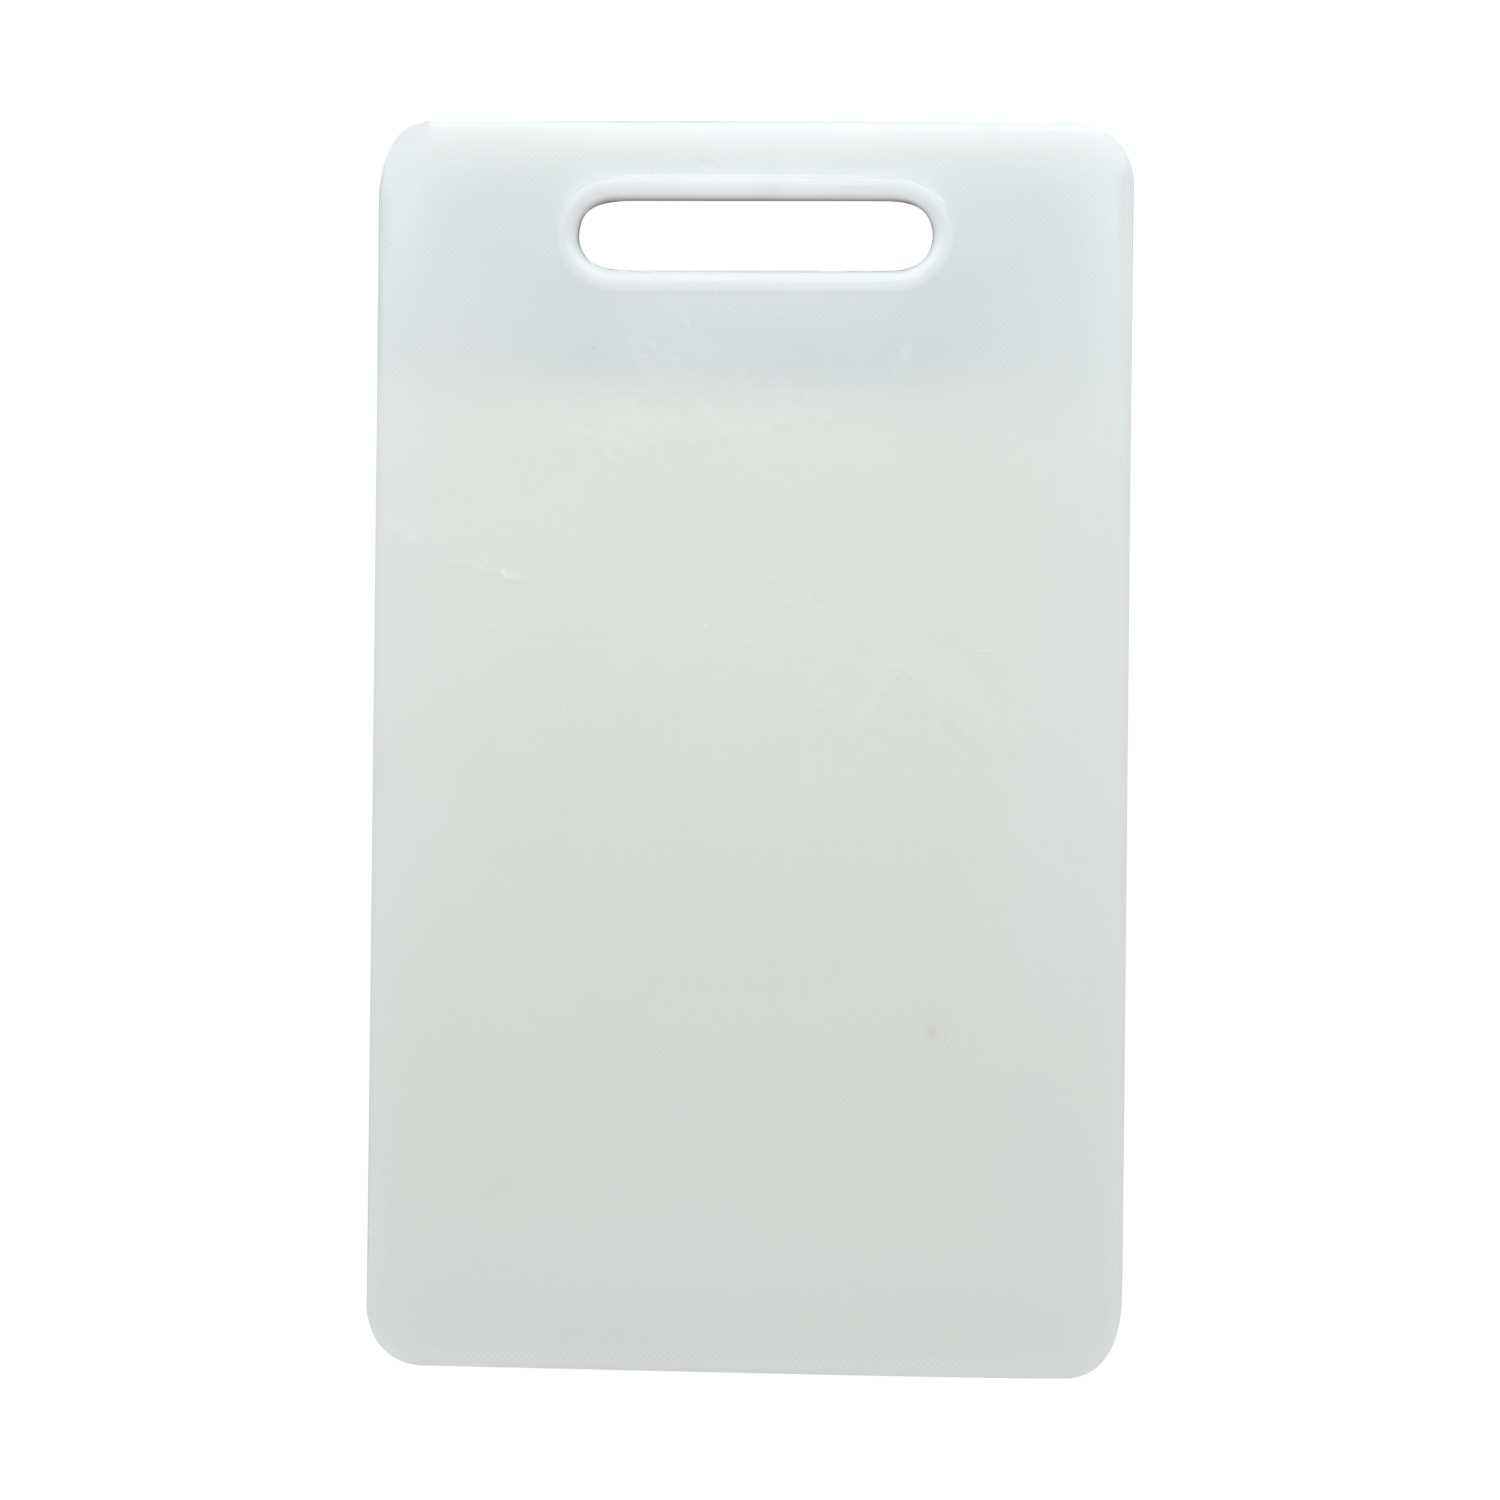 Best Cutting Board Dubai | Raj Plastic Cutting Board White
